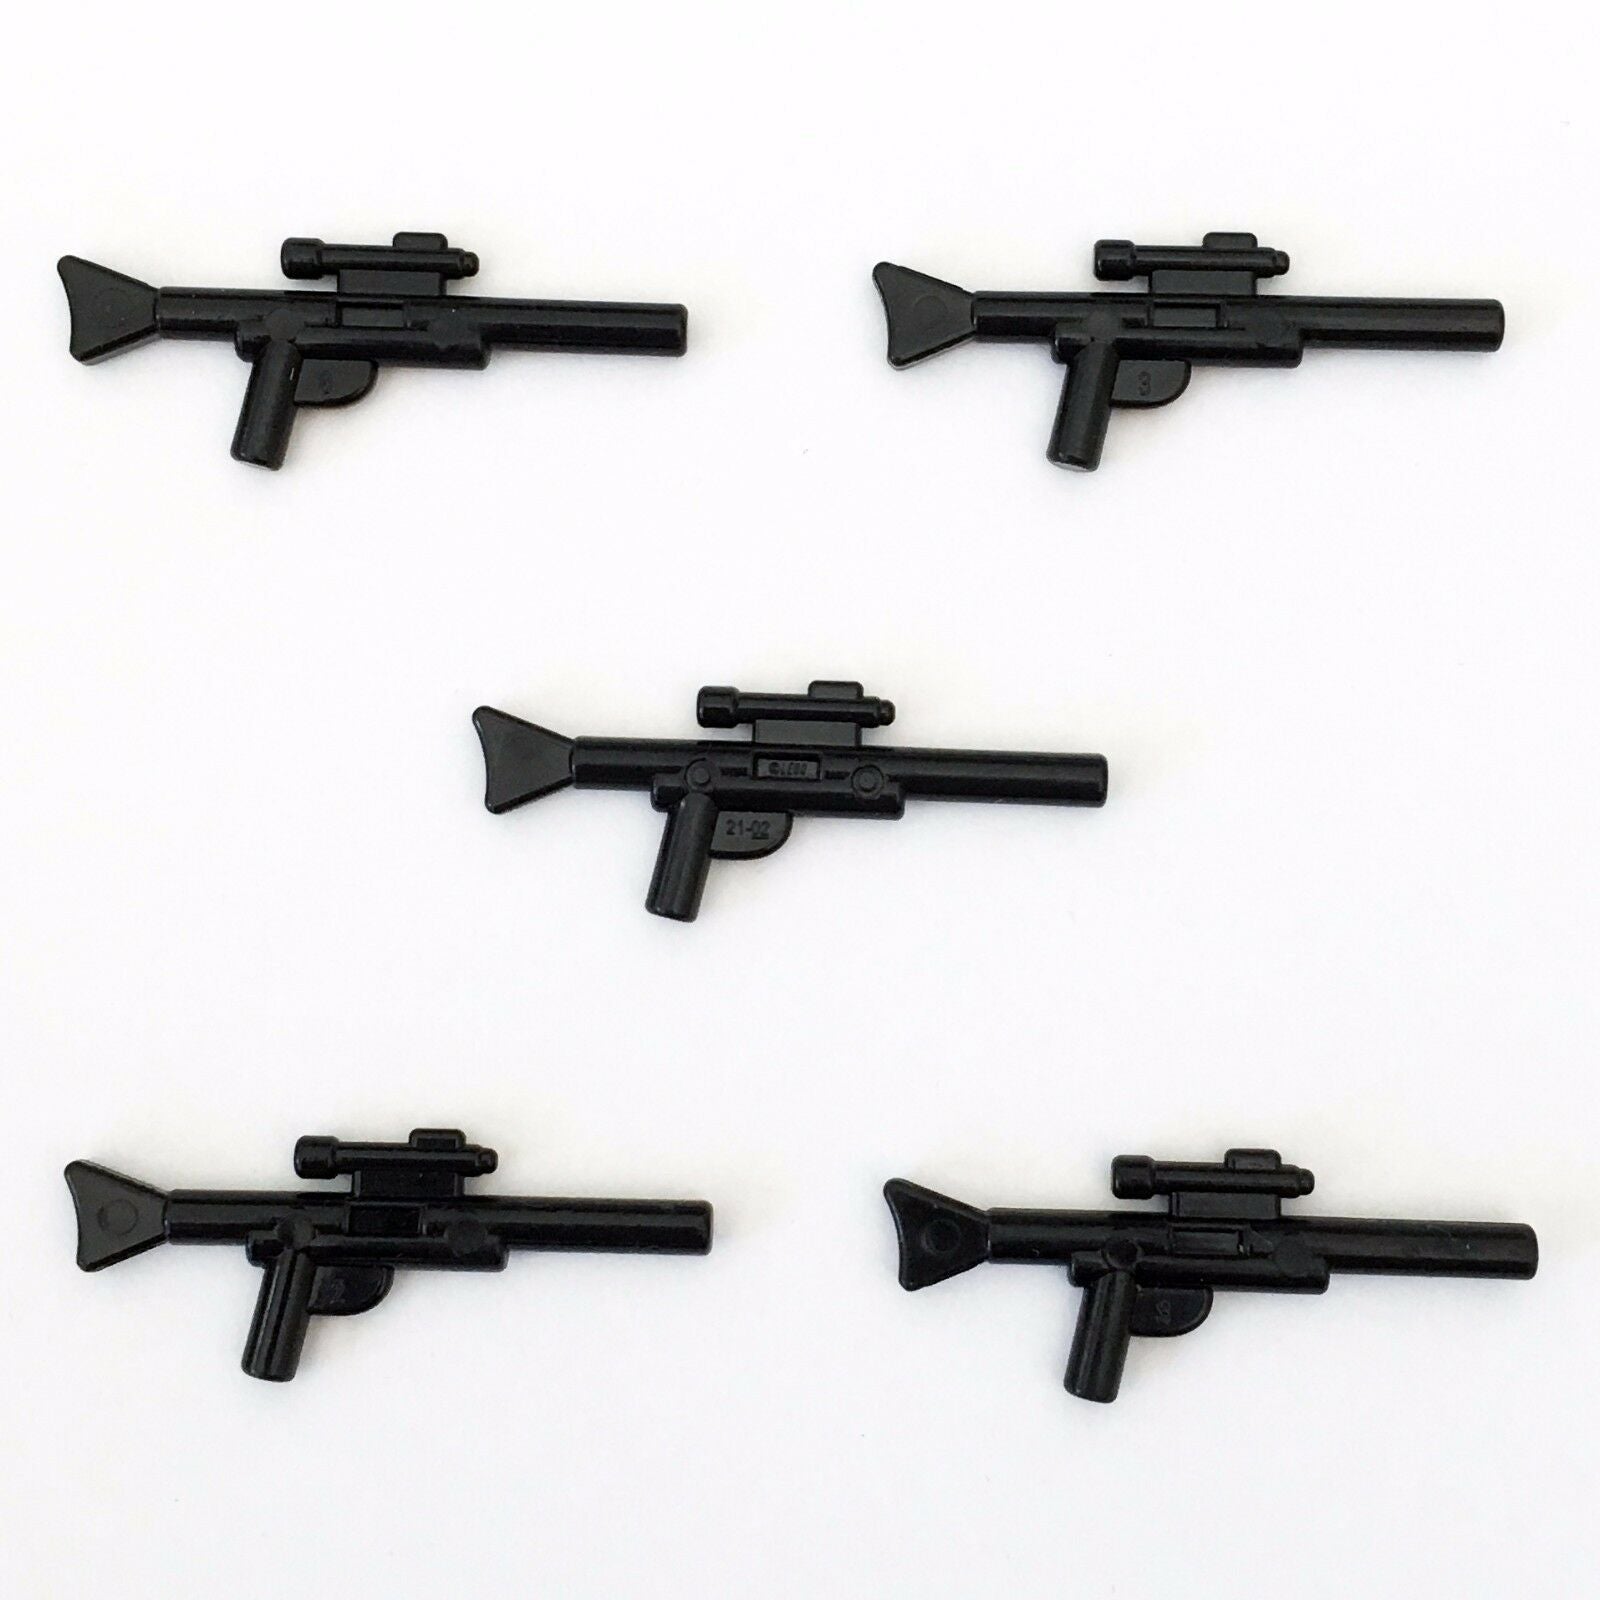 5 x STAR WARS lego BLASTER GUN SNIPER long RIFLE Minifigure weapons clone wars NEW - Bricks & Figures